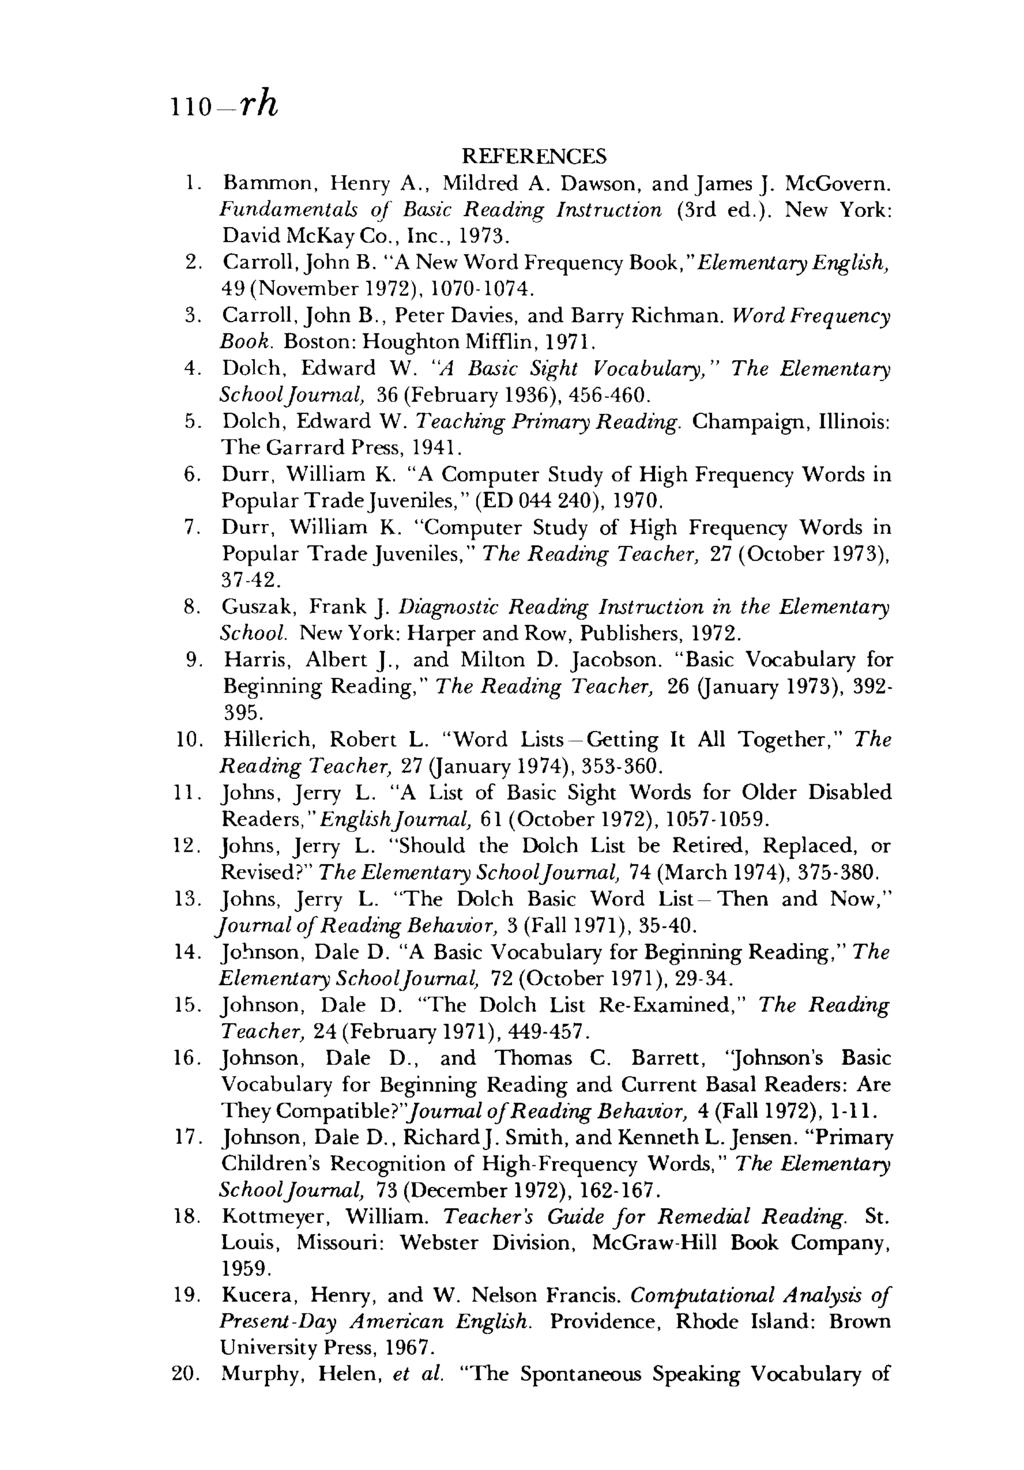 REFERENCES 1. Bammon, Henry A., Mildred A. Dawson, and James J. McGovern. Fundamentals of Basic Reading Instruction (3rd ed.). New York: David McKay Co., Inc., 1973. 2. Carroll, John B.